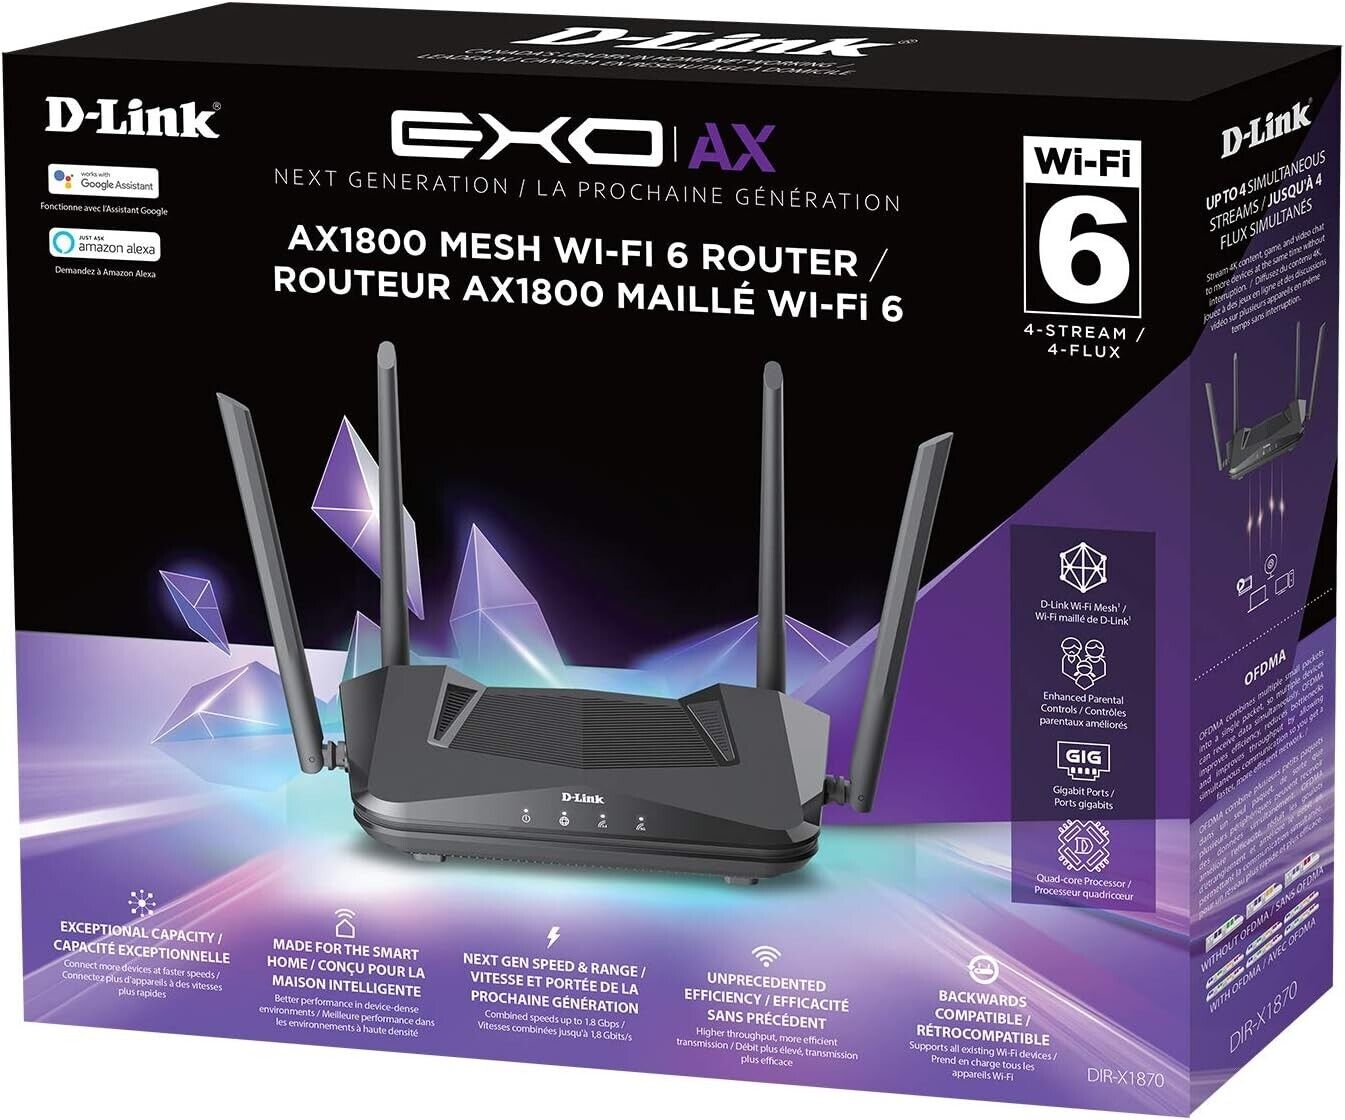 D-Link AX1800 Mesh Wi-Fi 6 Router-4-Stream, Quad-core Processor, Dual Band